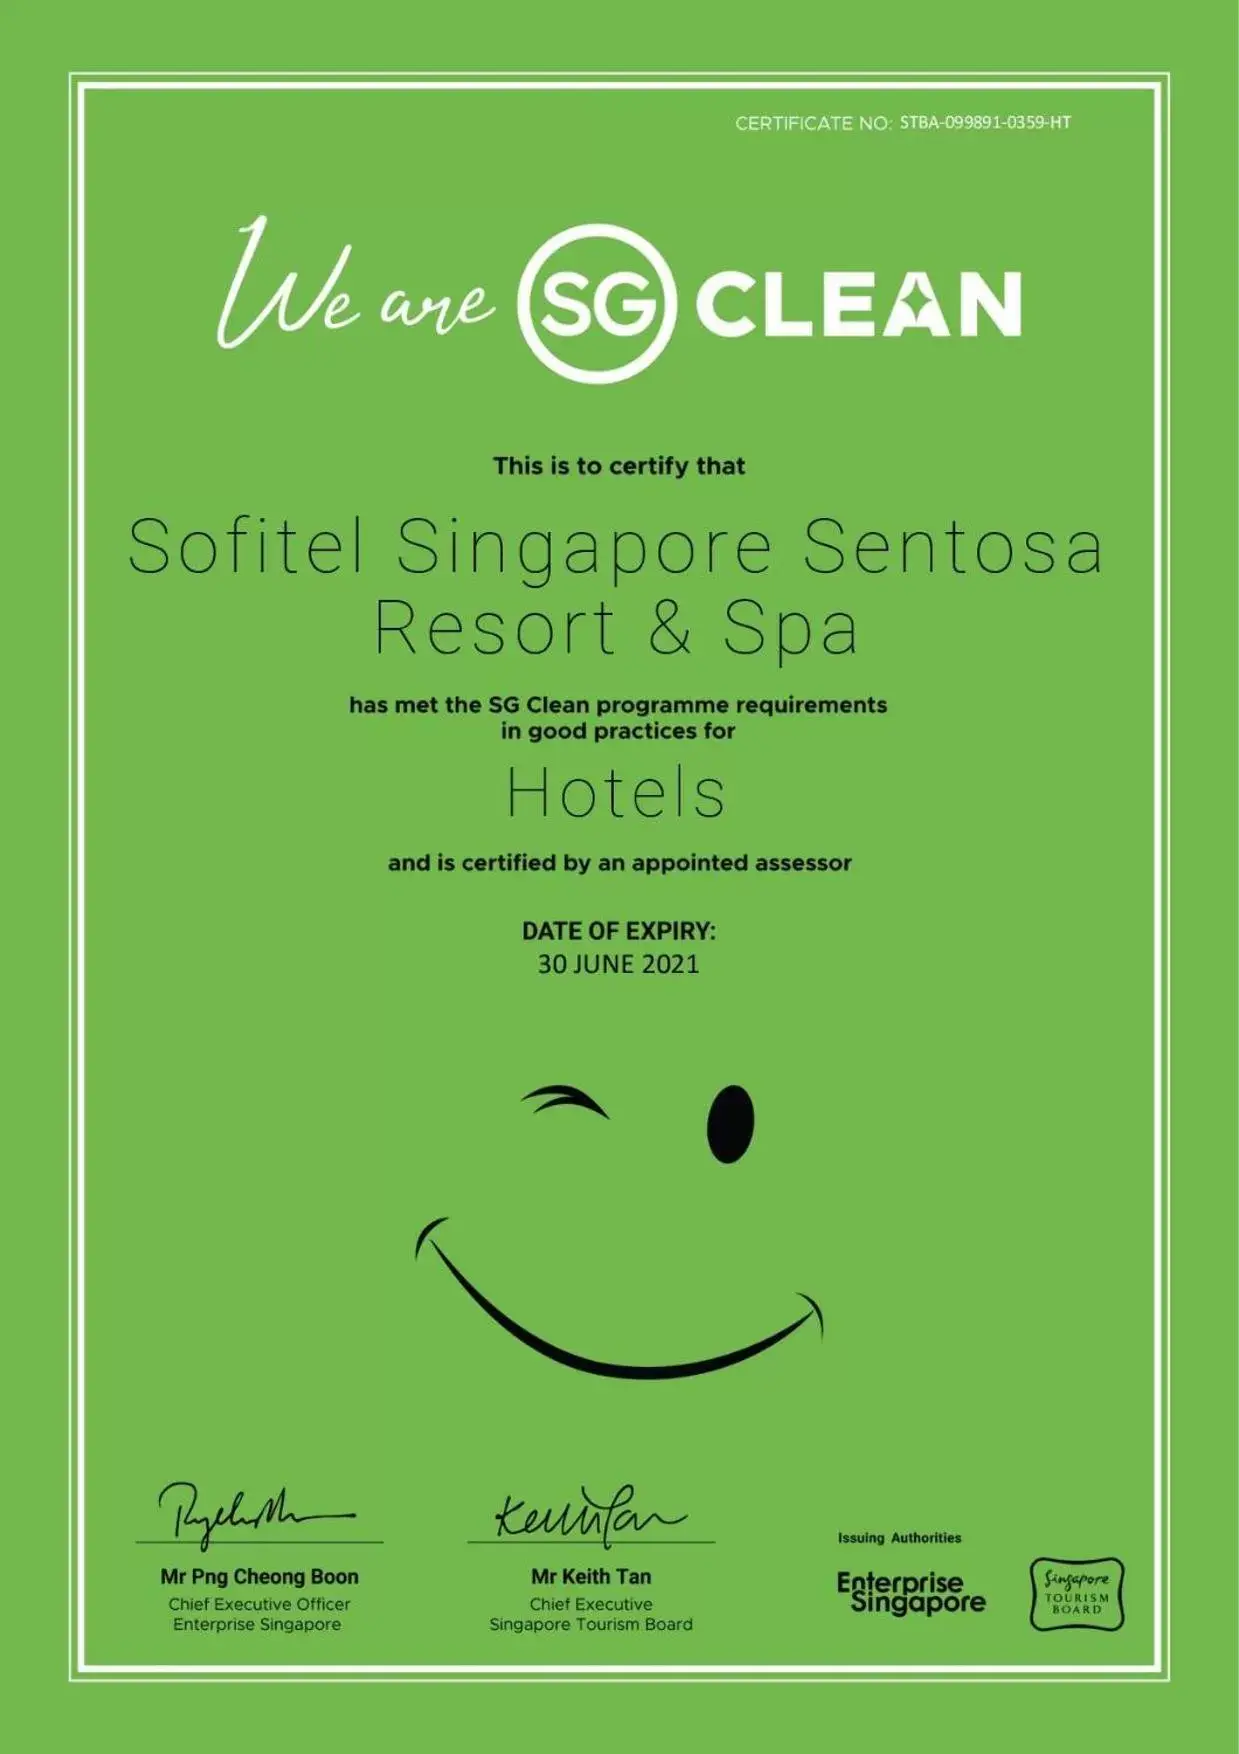 Certificate/Award in Sofitel Singapore Sentosa Resort & Spa